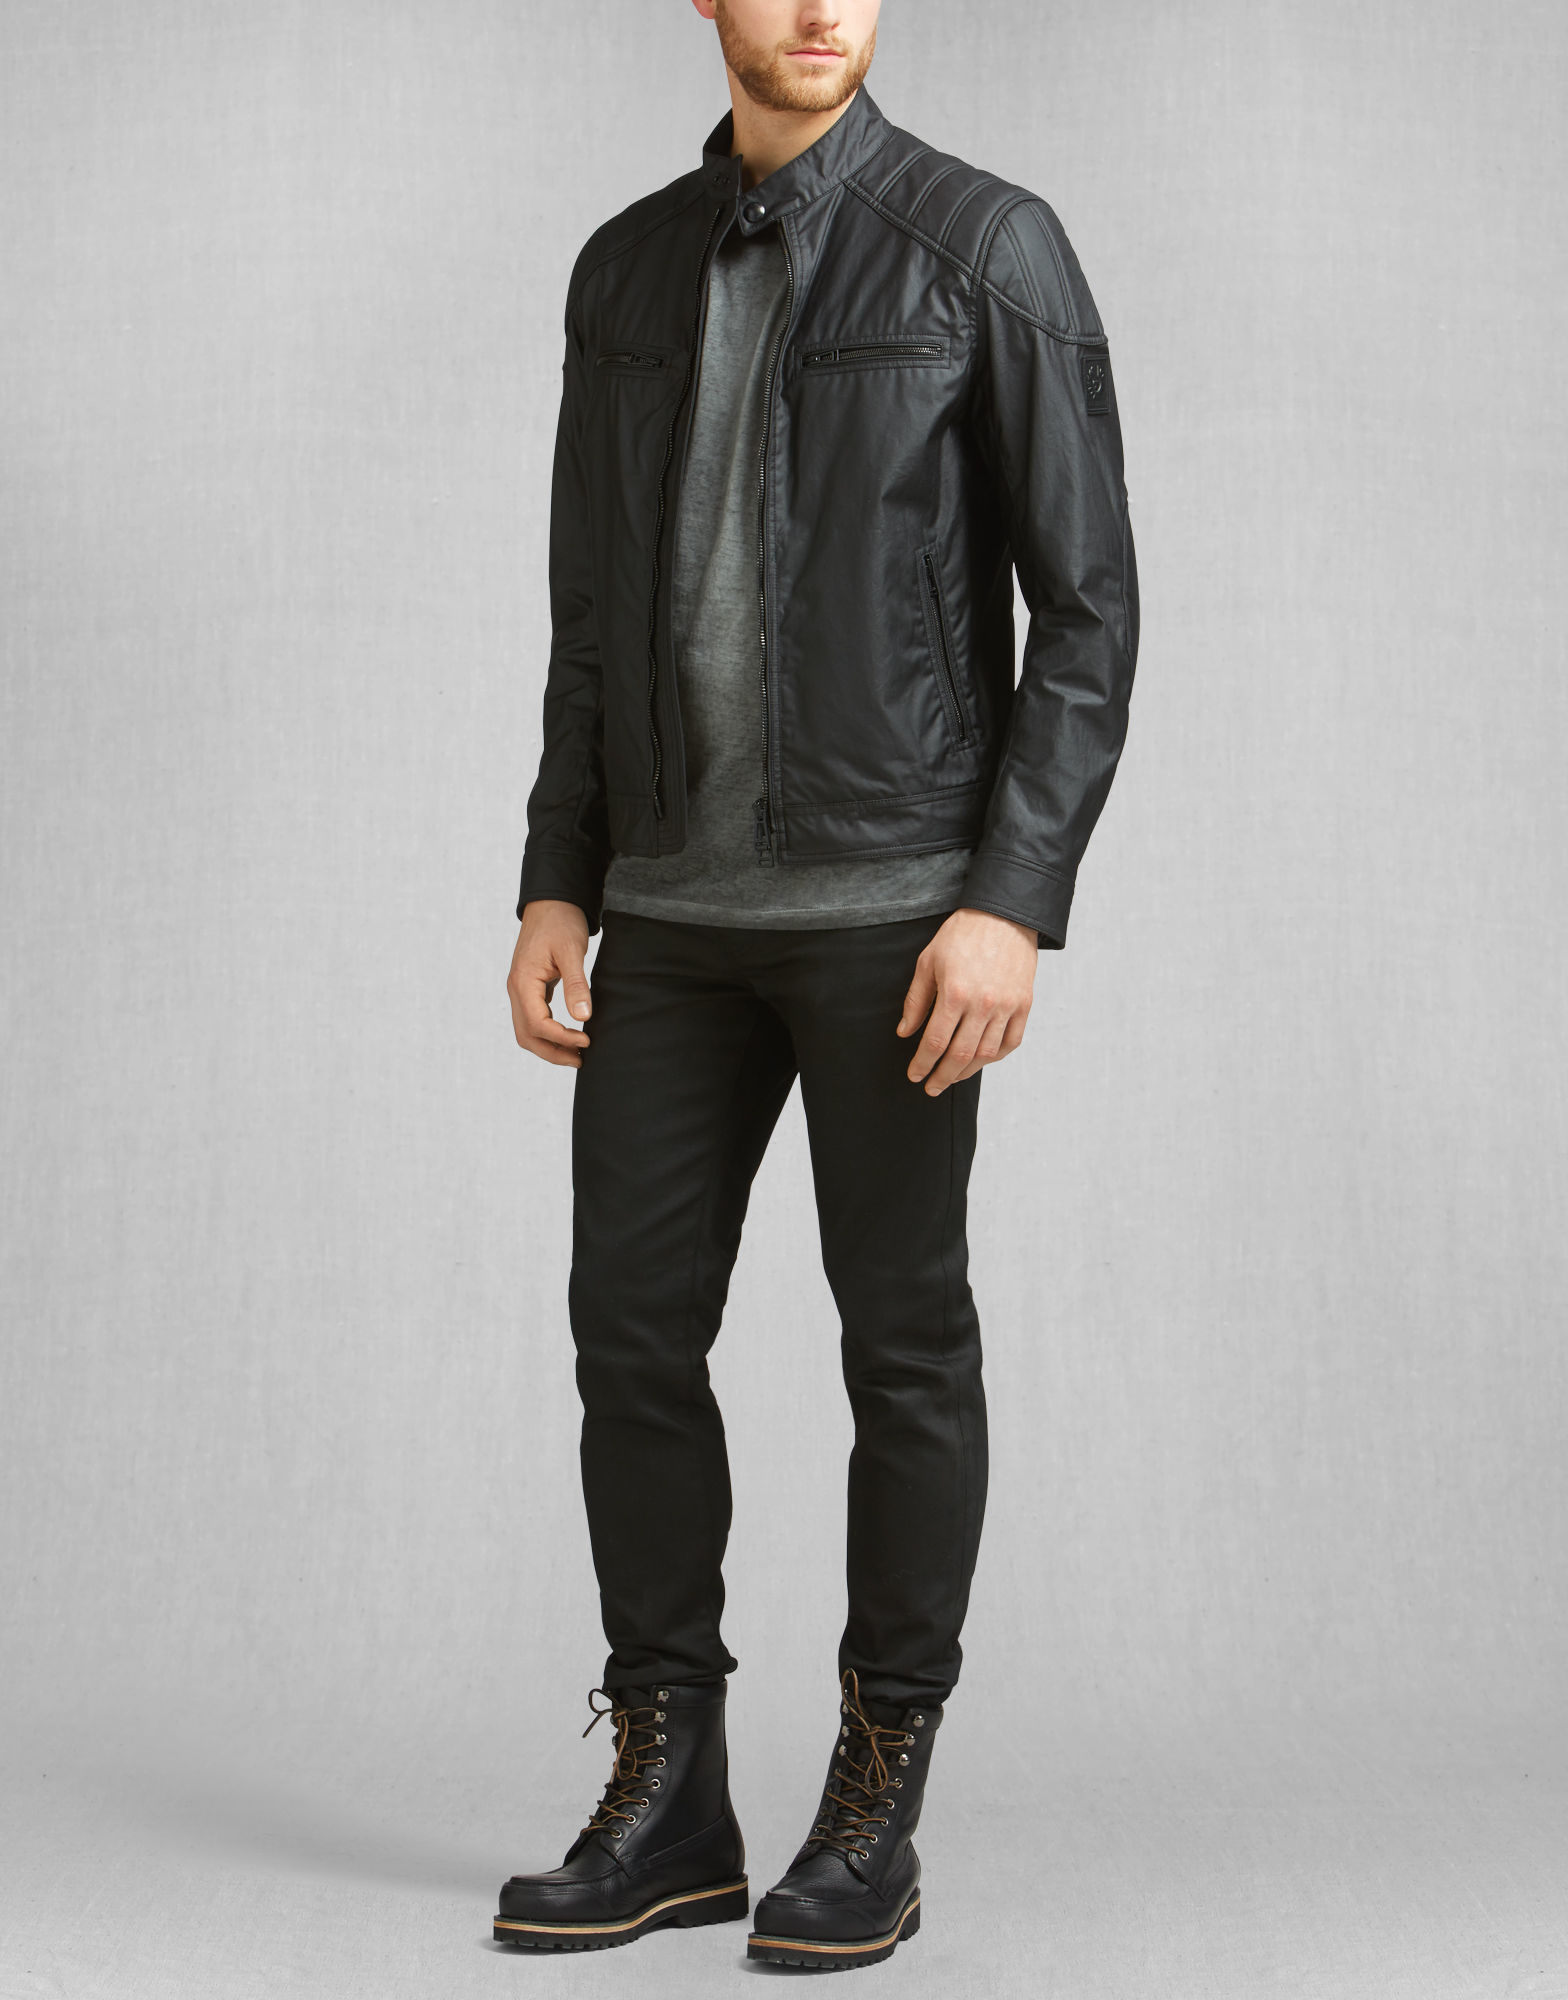 Belstaff Cotton Linford Blouson Jacket in Black for Men - Lyst